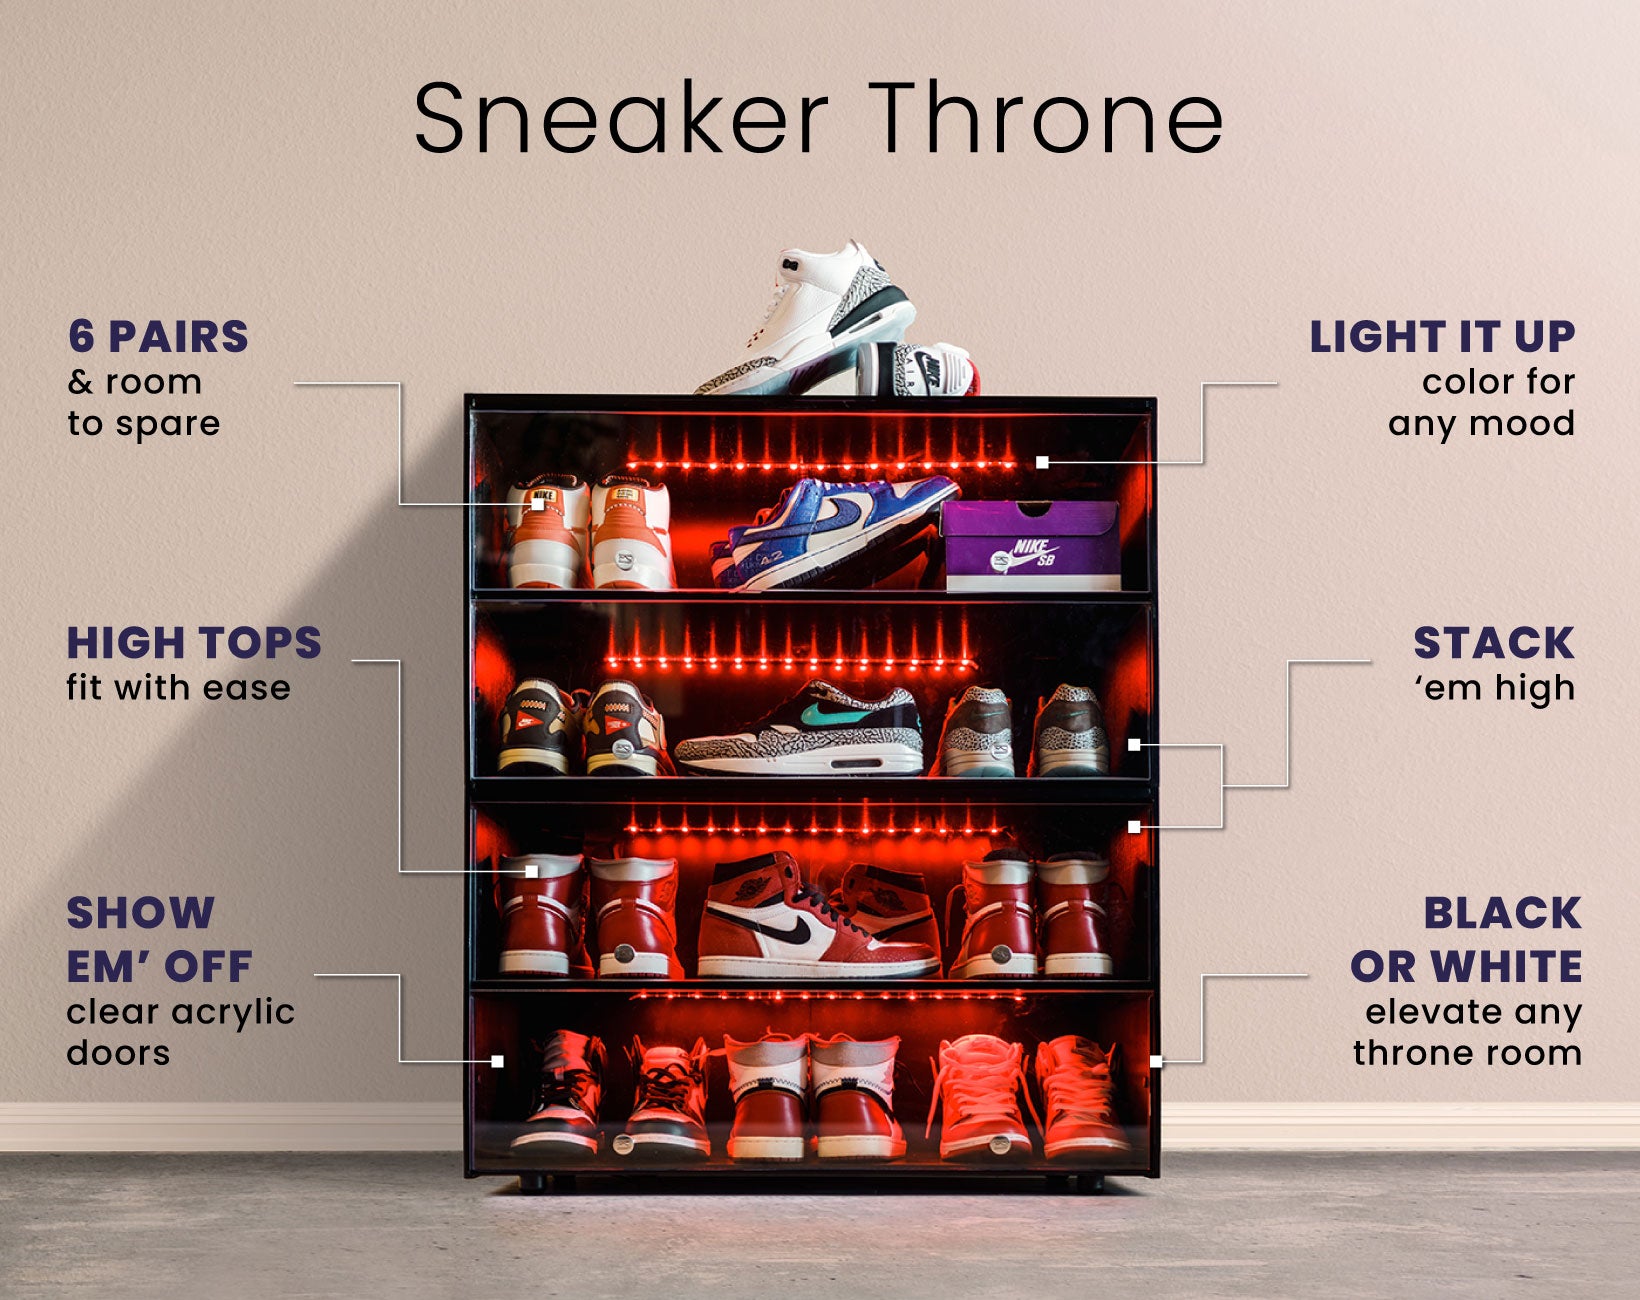 Sneaker Throne Benefits Infographic